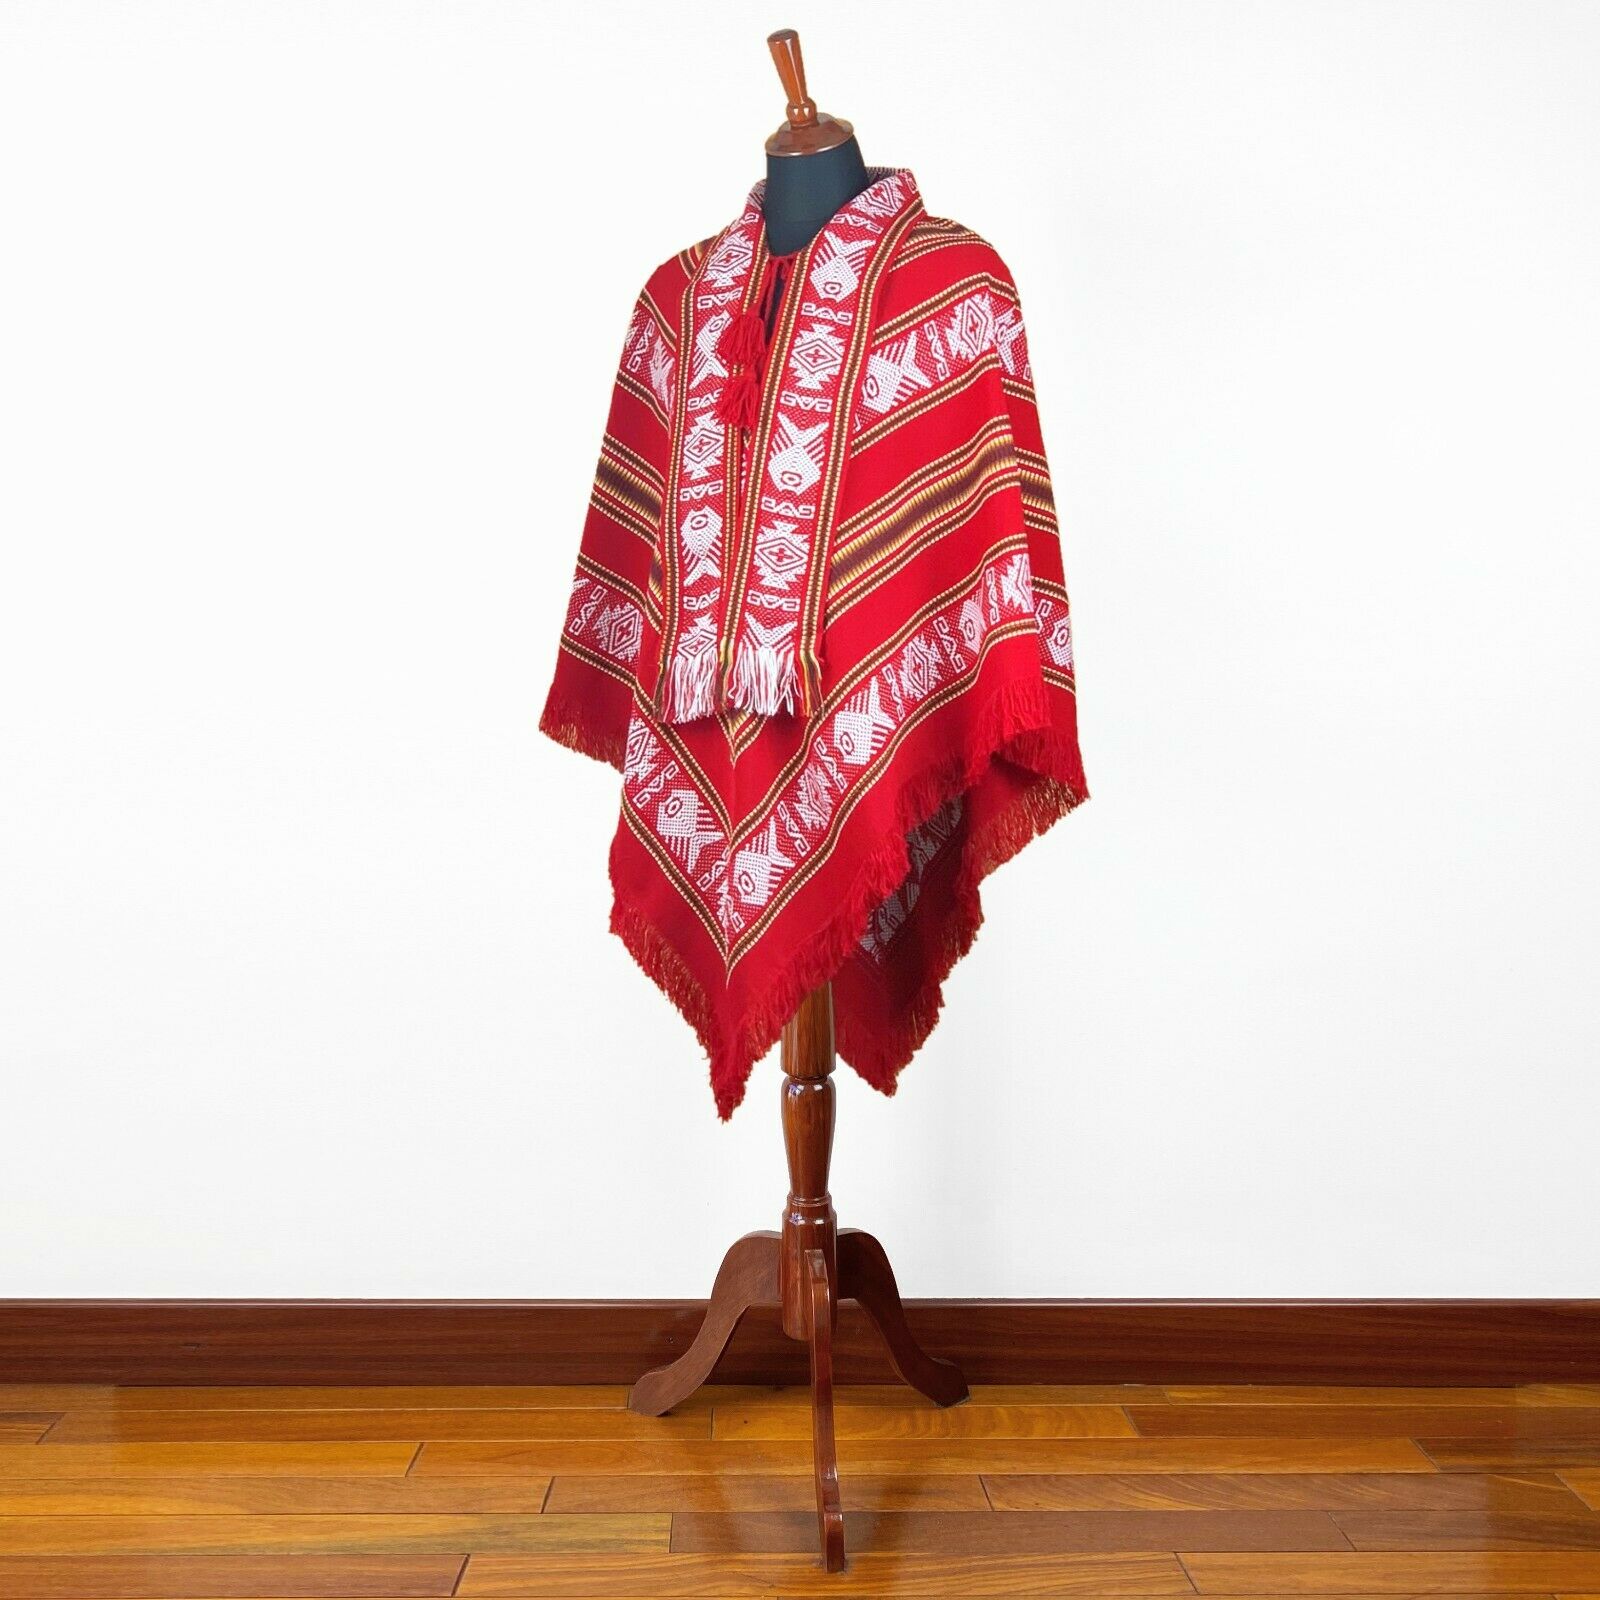 Paquintza - Alpaca wool Serape Poncho with scarf - Piranha pattern - Red - Unisex